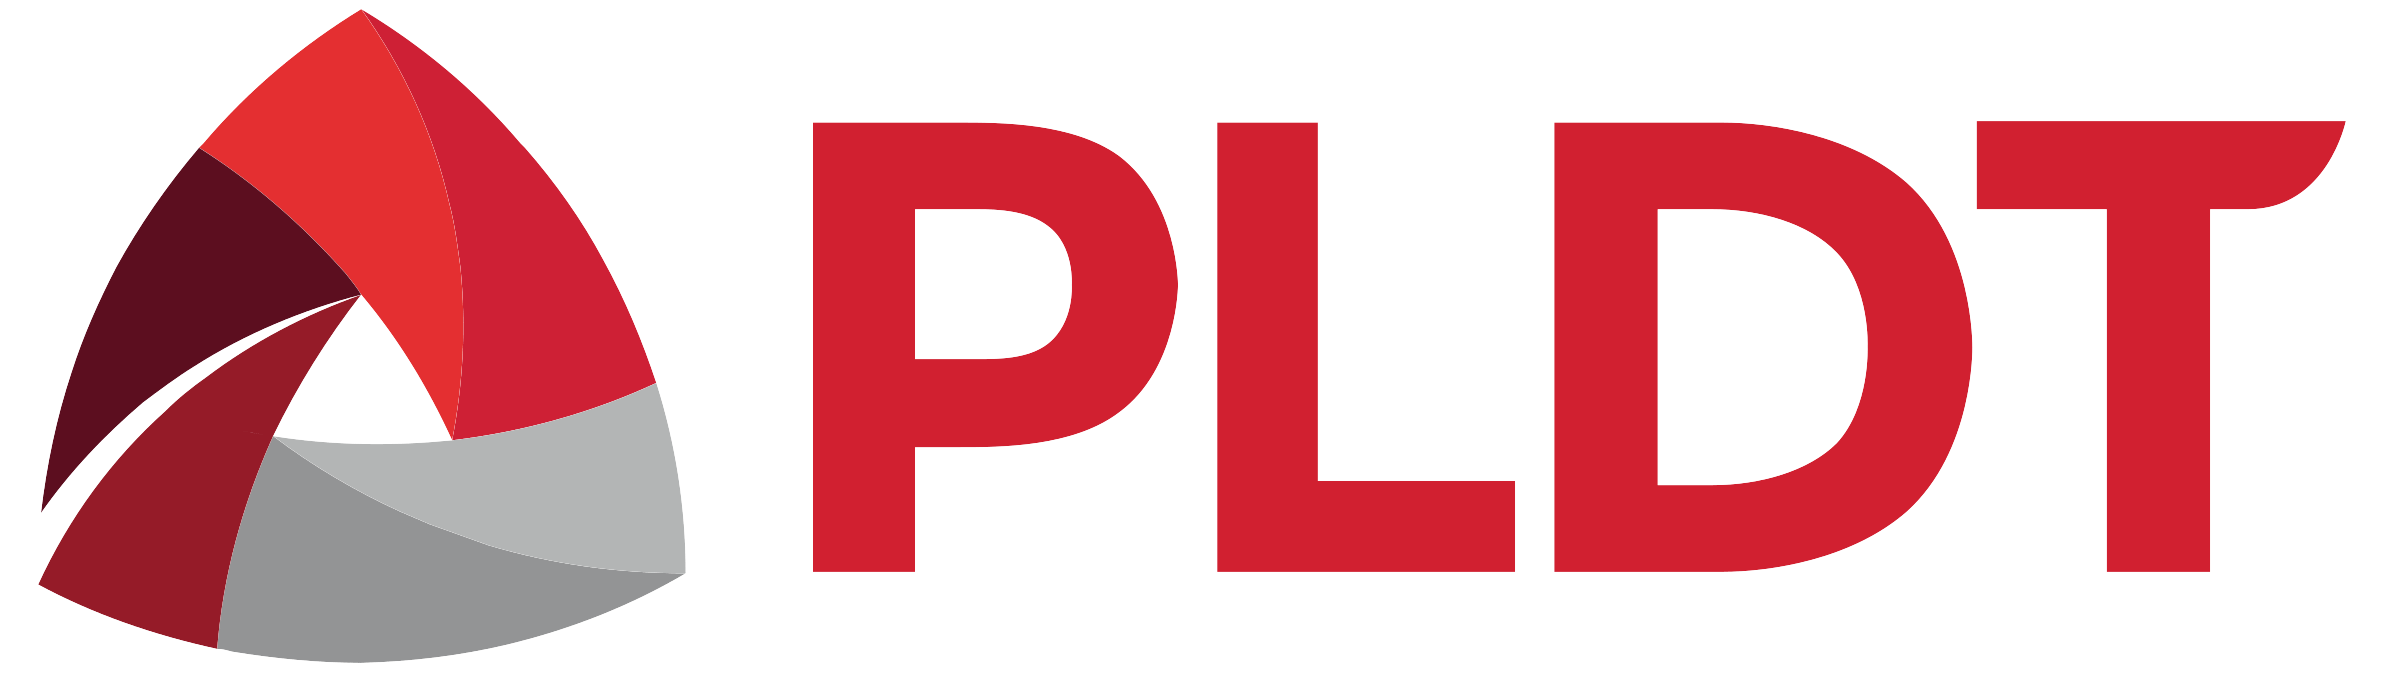 Philippine Long Distance Telephone Company (PLDT)